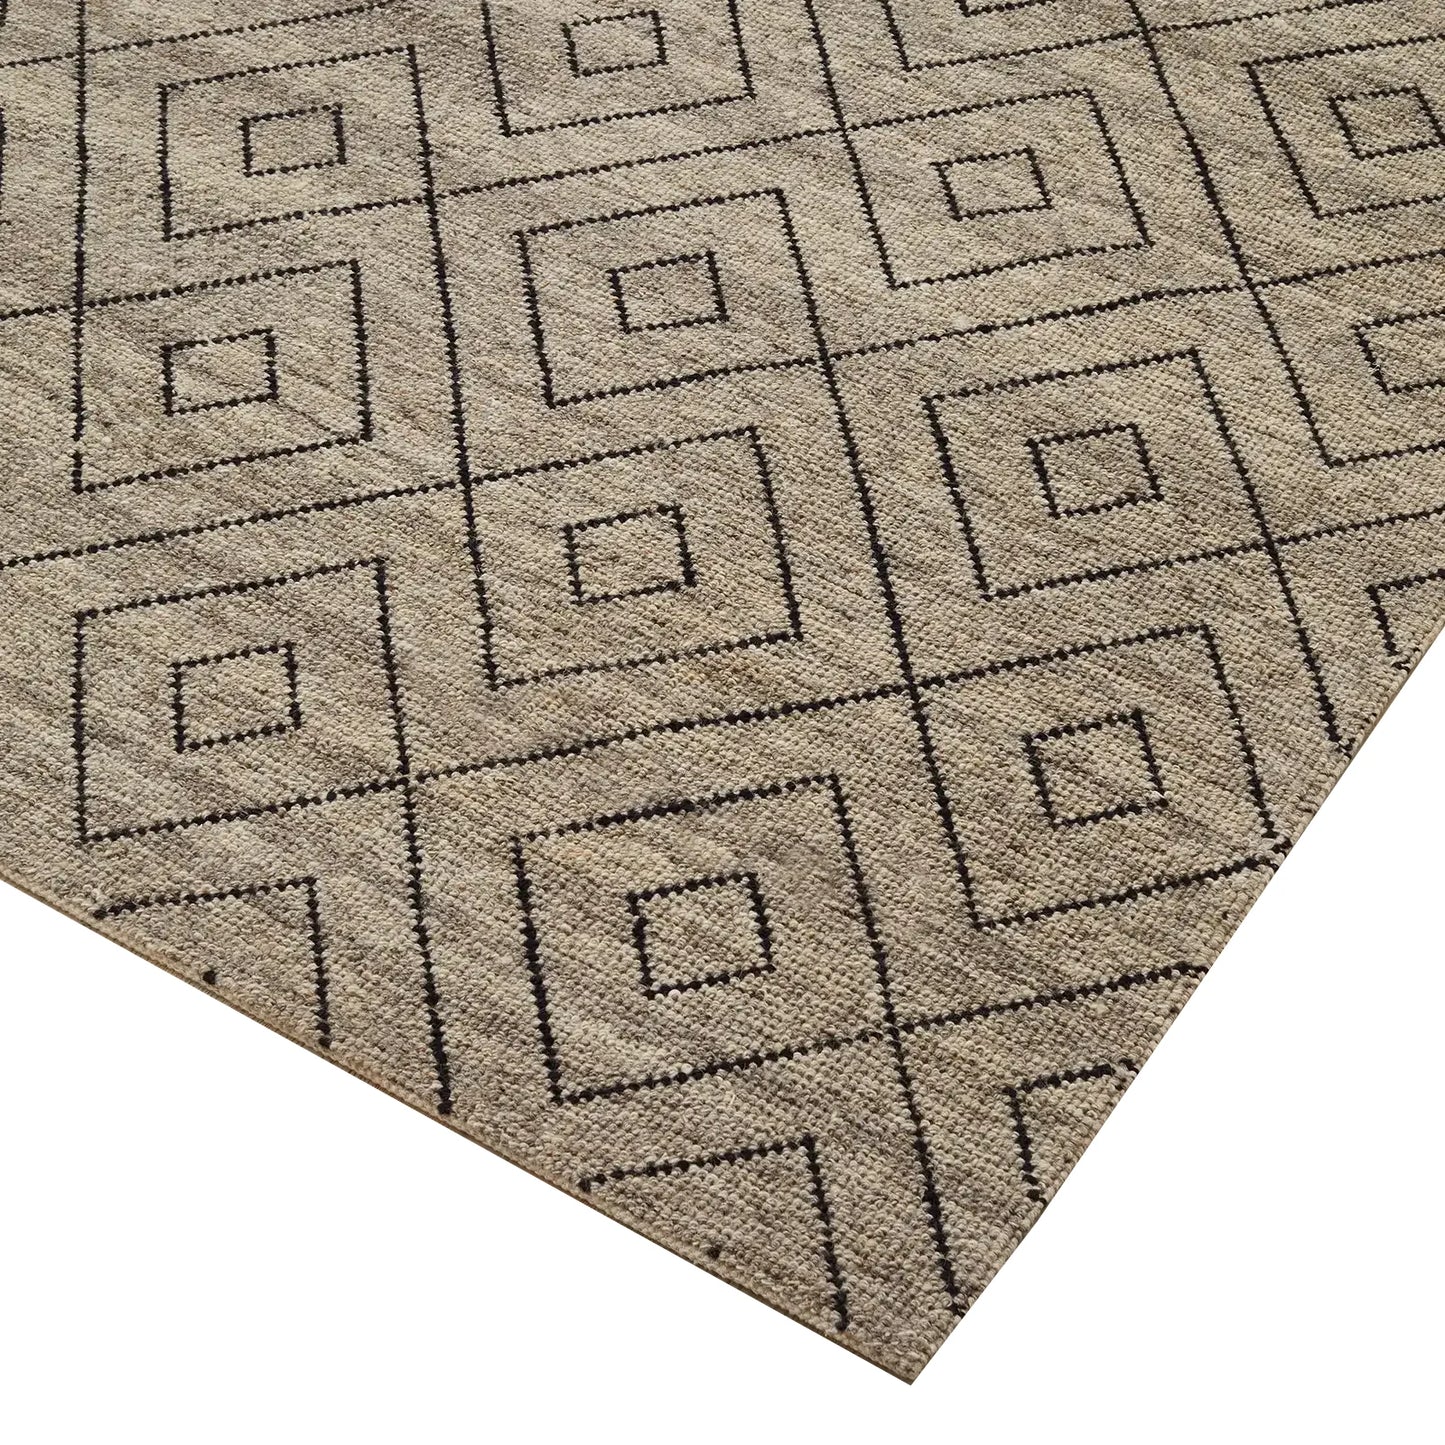 Weave Makalu wool cotton rug basalt 200 x 300cm